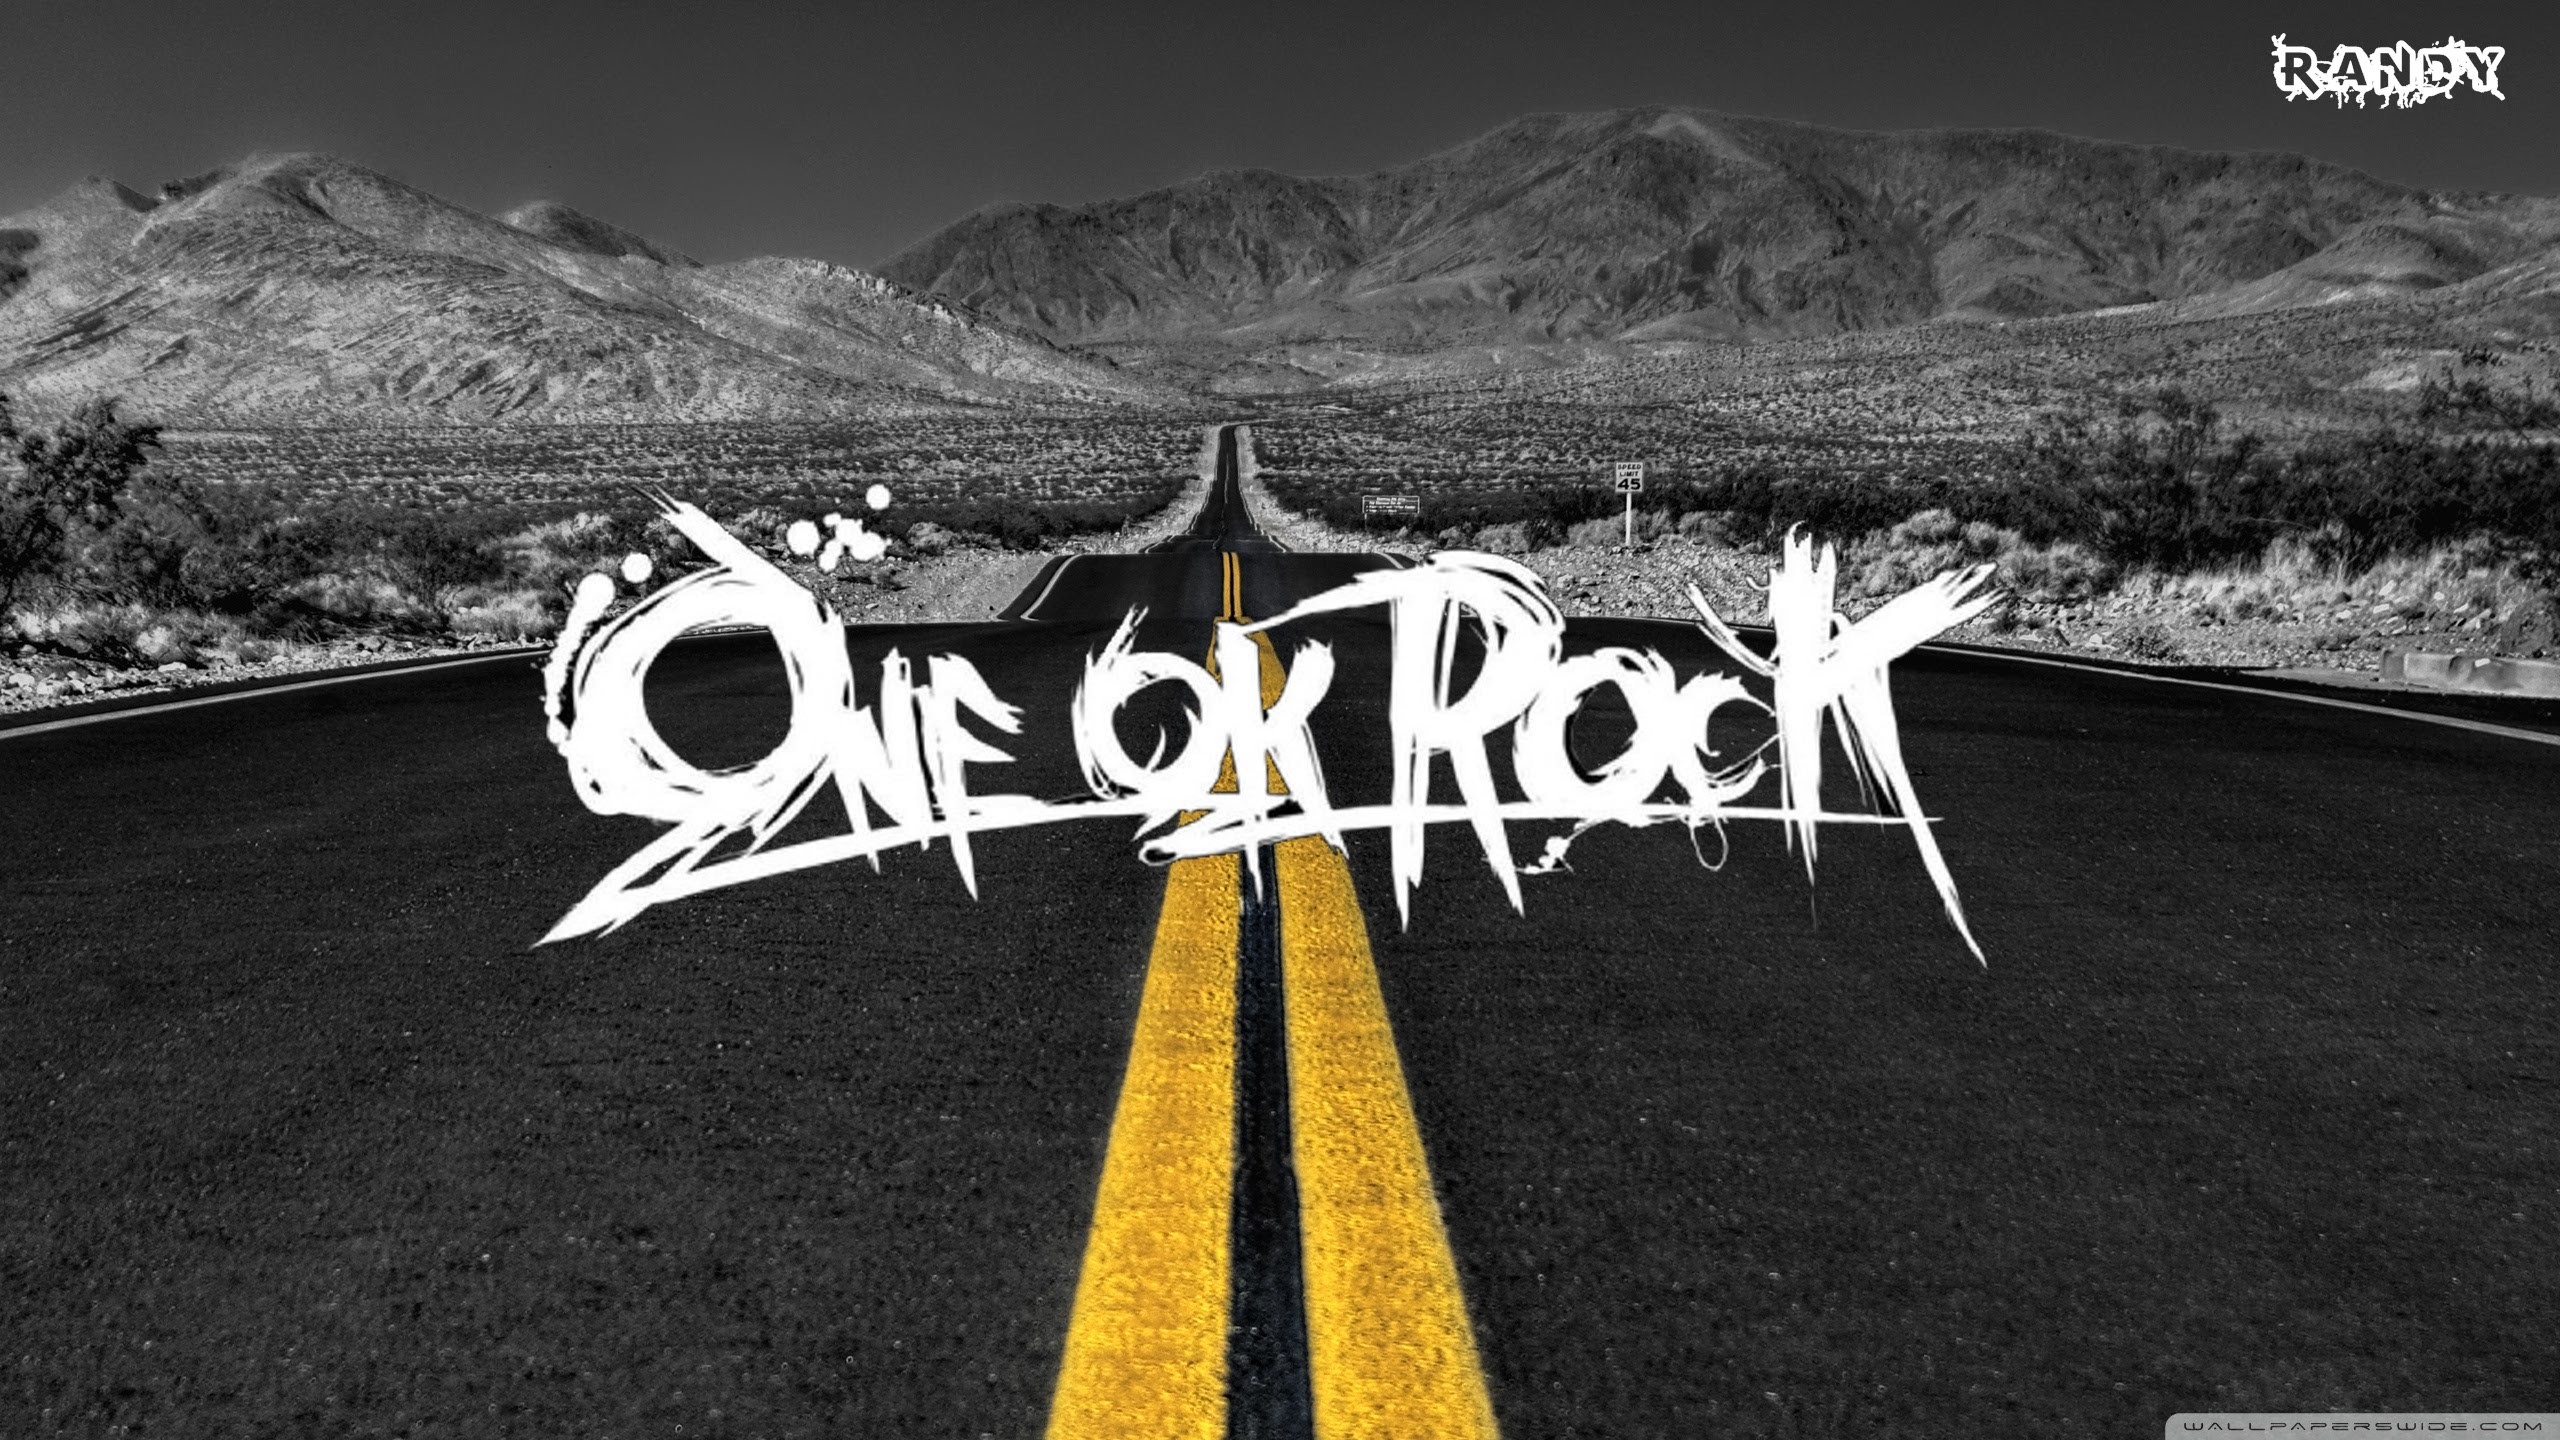 ONEOK Rock